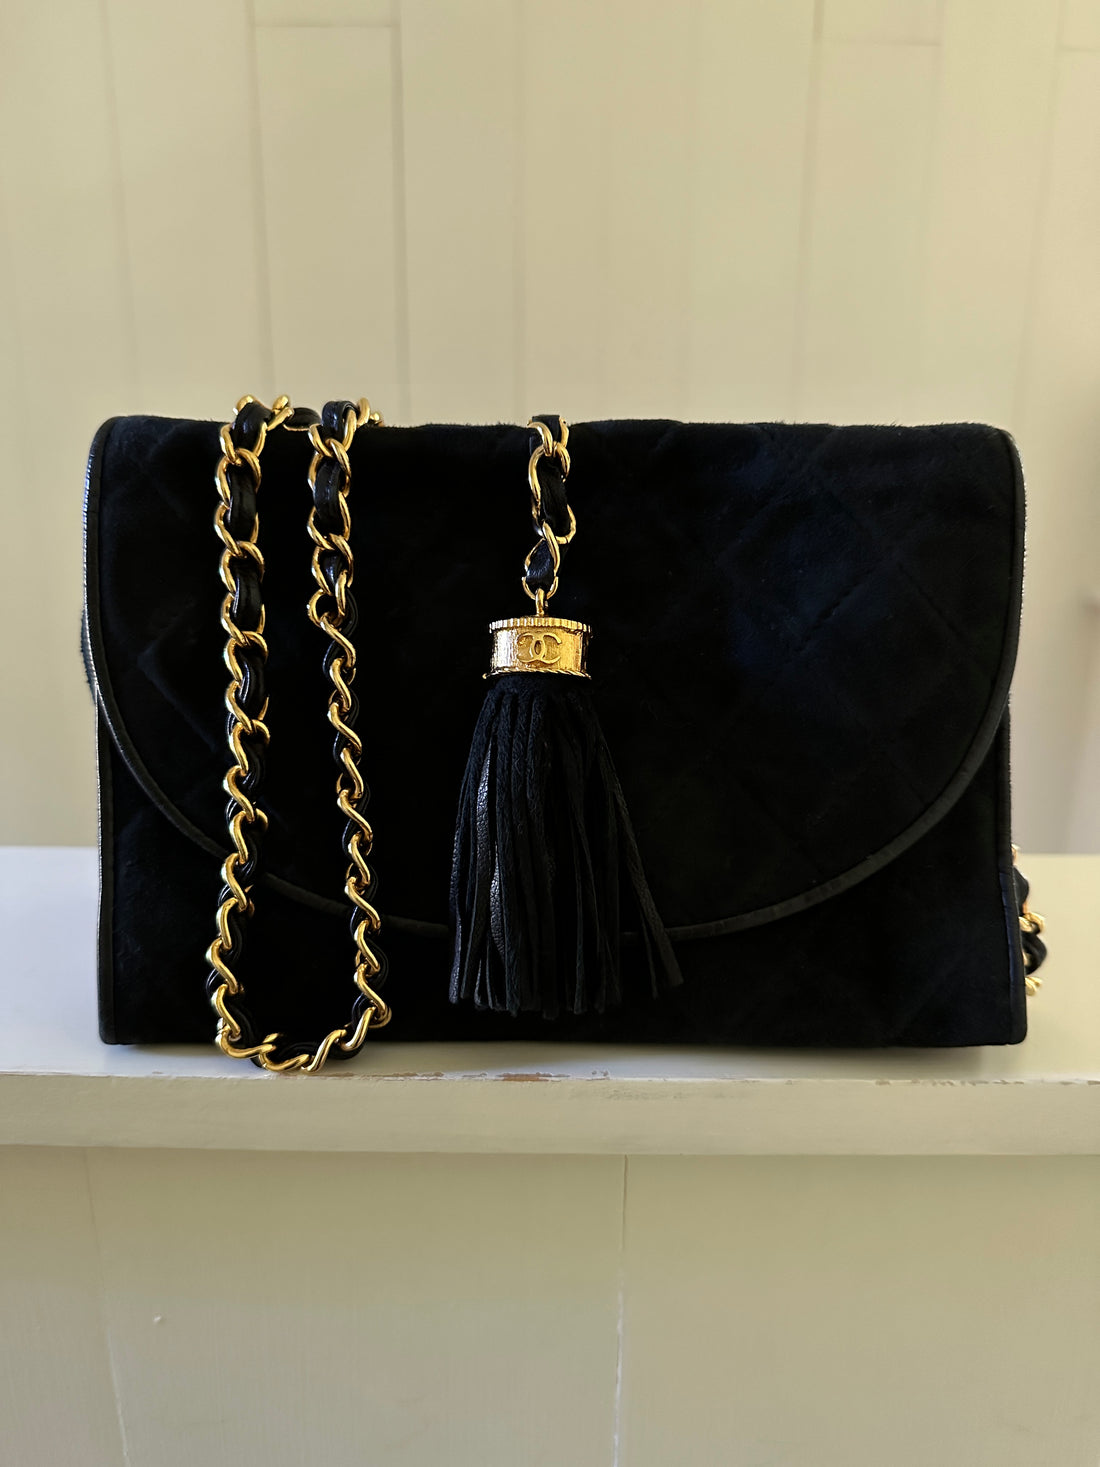 Chanel Black Leather Sac Class Rabat Bag - Prestige Online Store